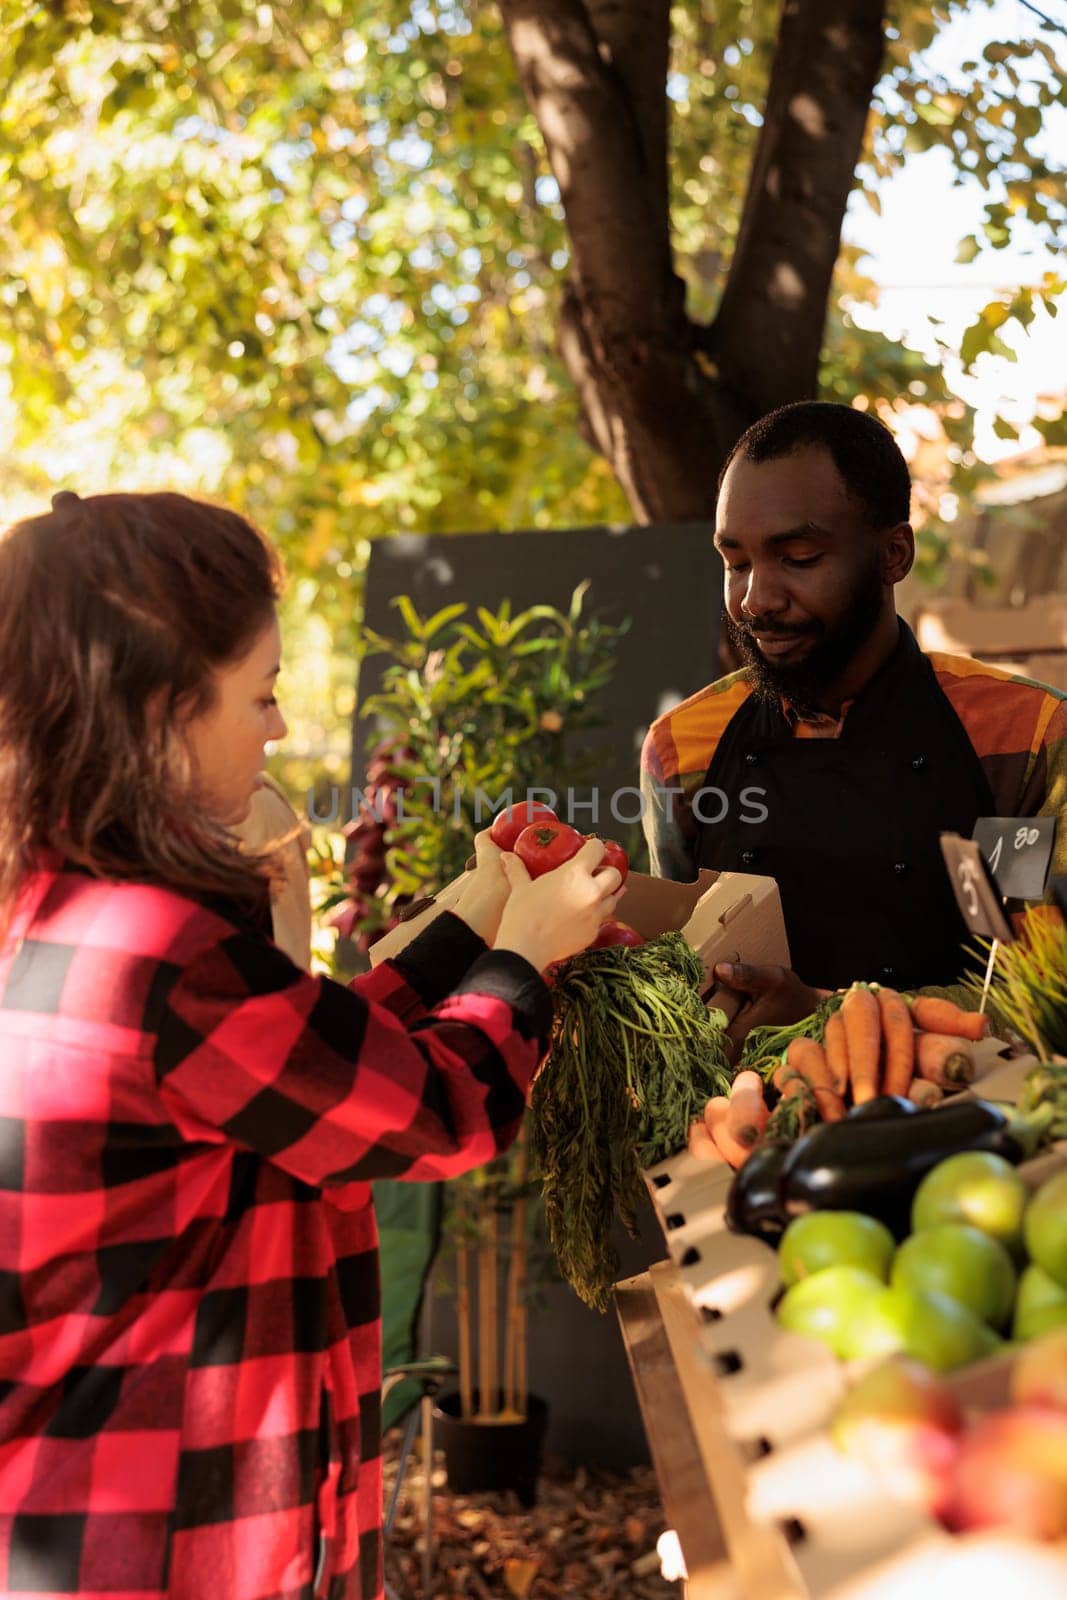 African american vendor selling organic fruits or veggies by DCStudio